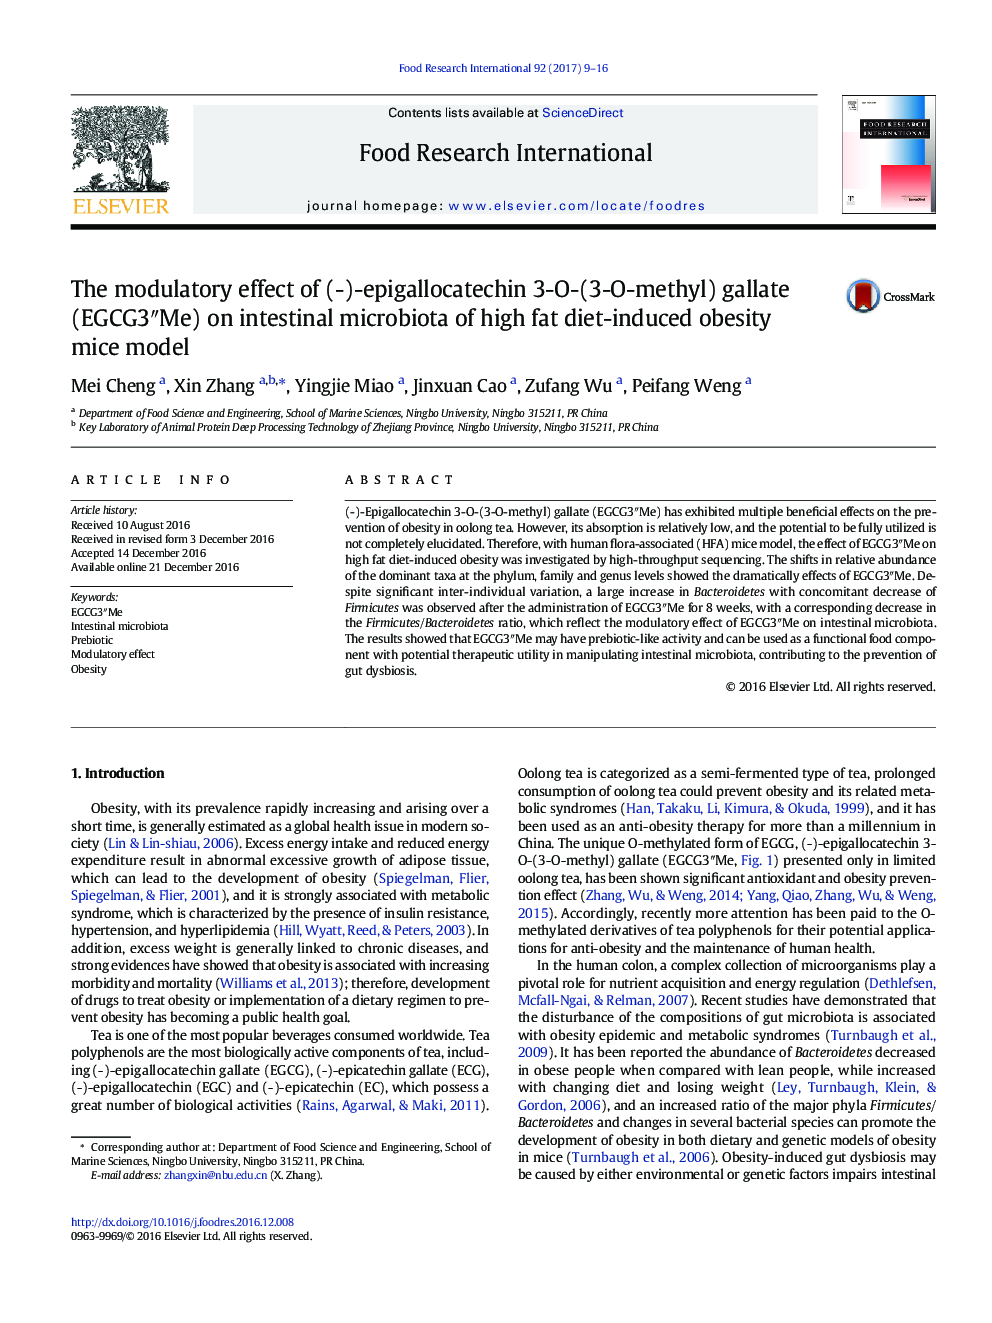 The modulatory effect of (-)-epigallocatechin 3-O-(3-O-methyl) gallate (EGCG3â³Me) on intestinal microbiota of high fat diet-induced obesity mice model